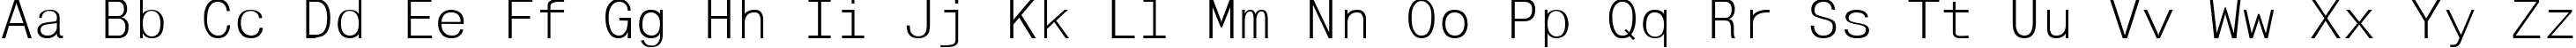 Пример написания английского алфавита шрифтом HelvFixed